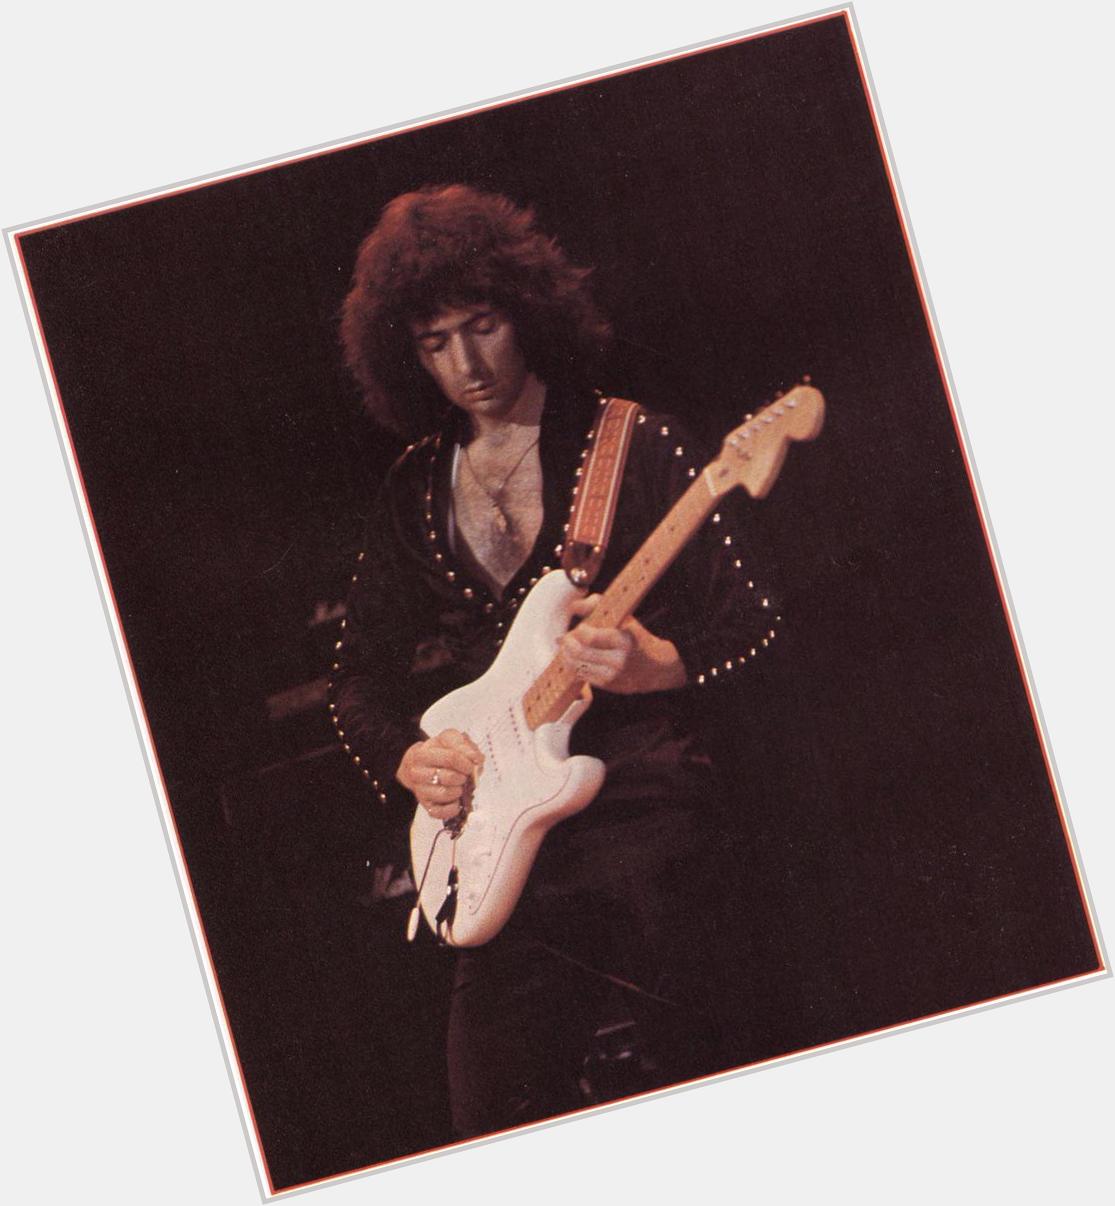 Happy birthday to guitarist Ritchie Blackmore! 